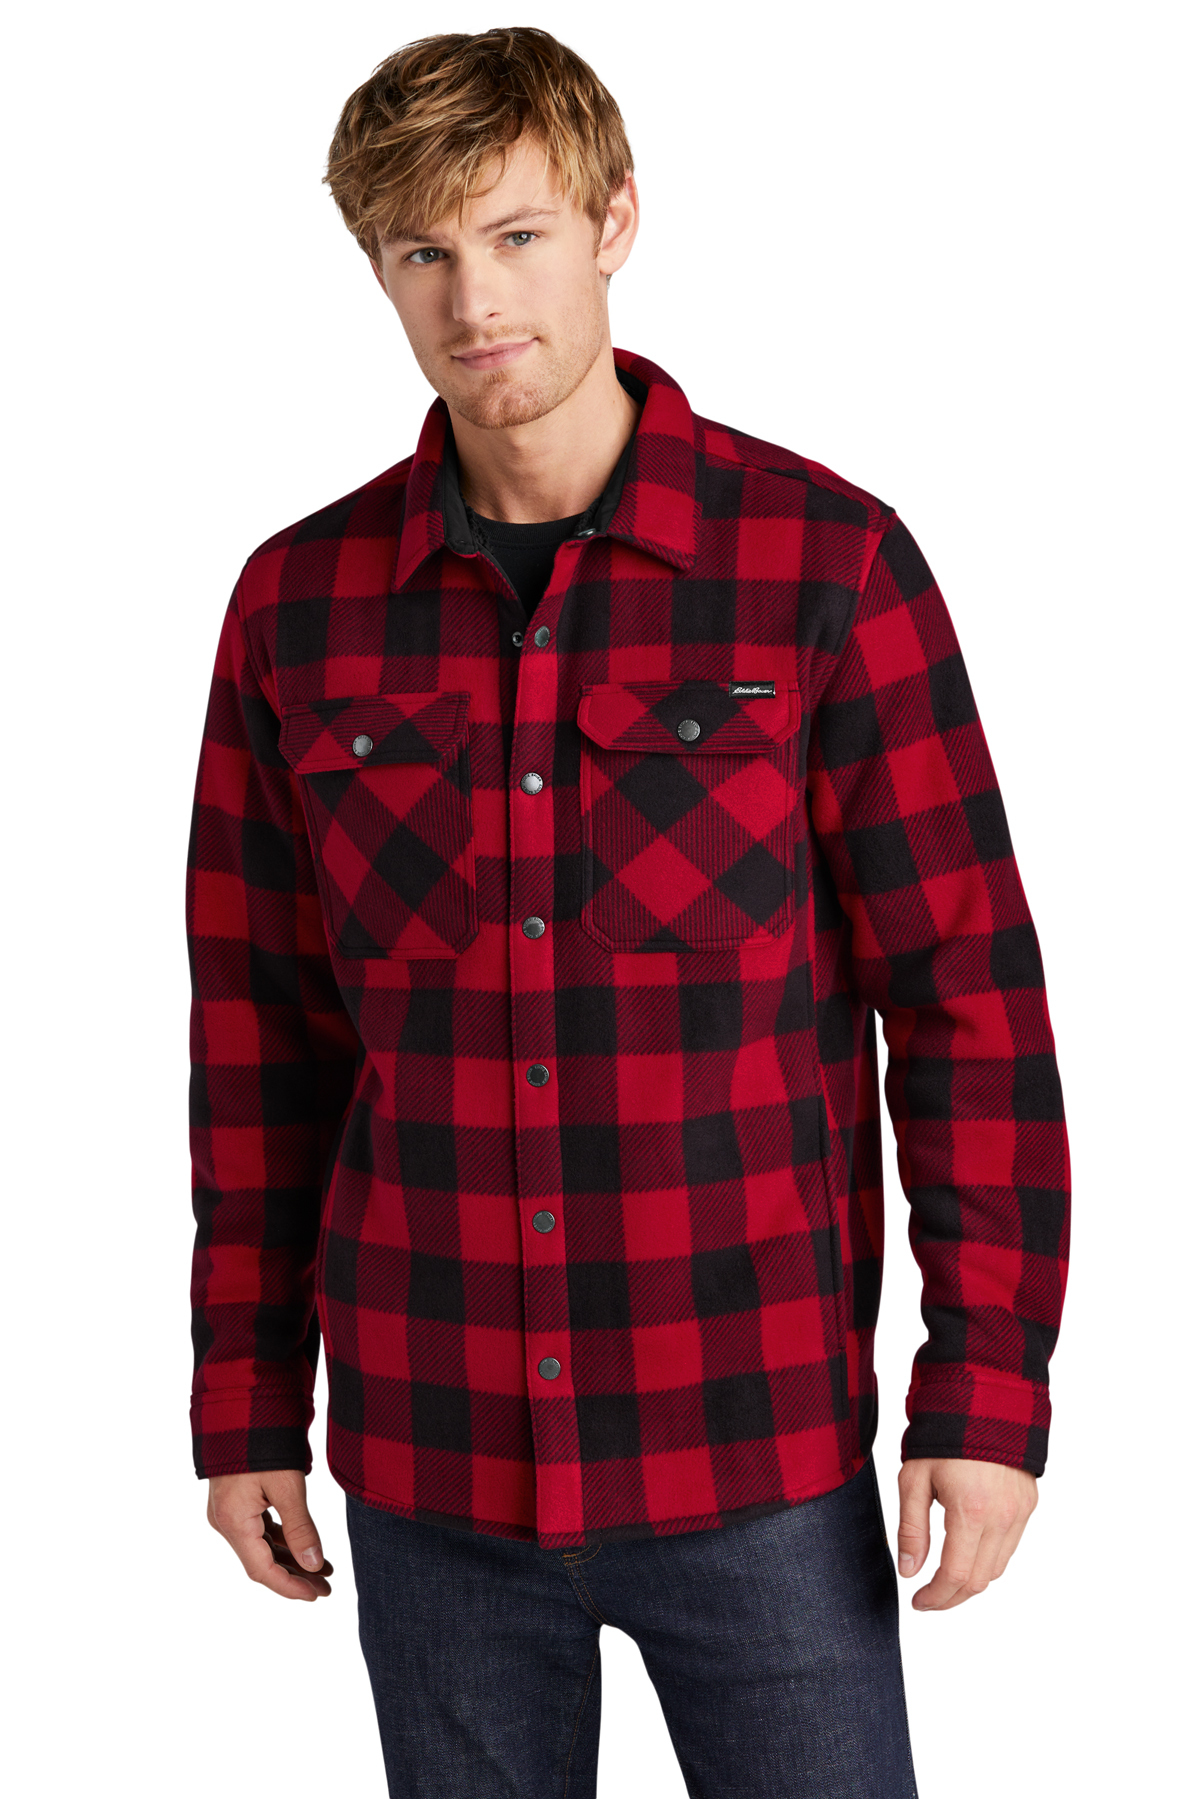 Eddie Bauer Woodland Shirt Jac | Product | SanMar